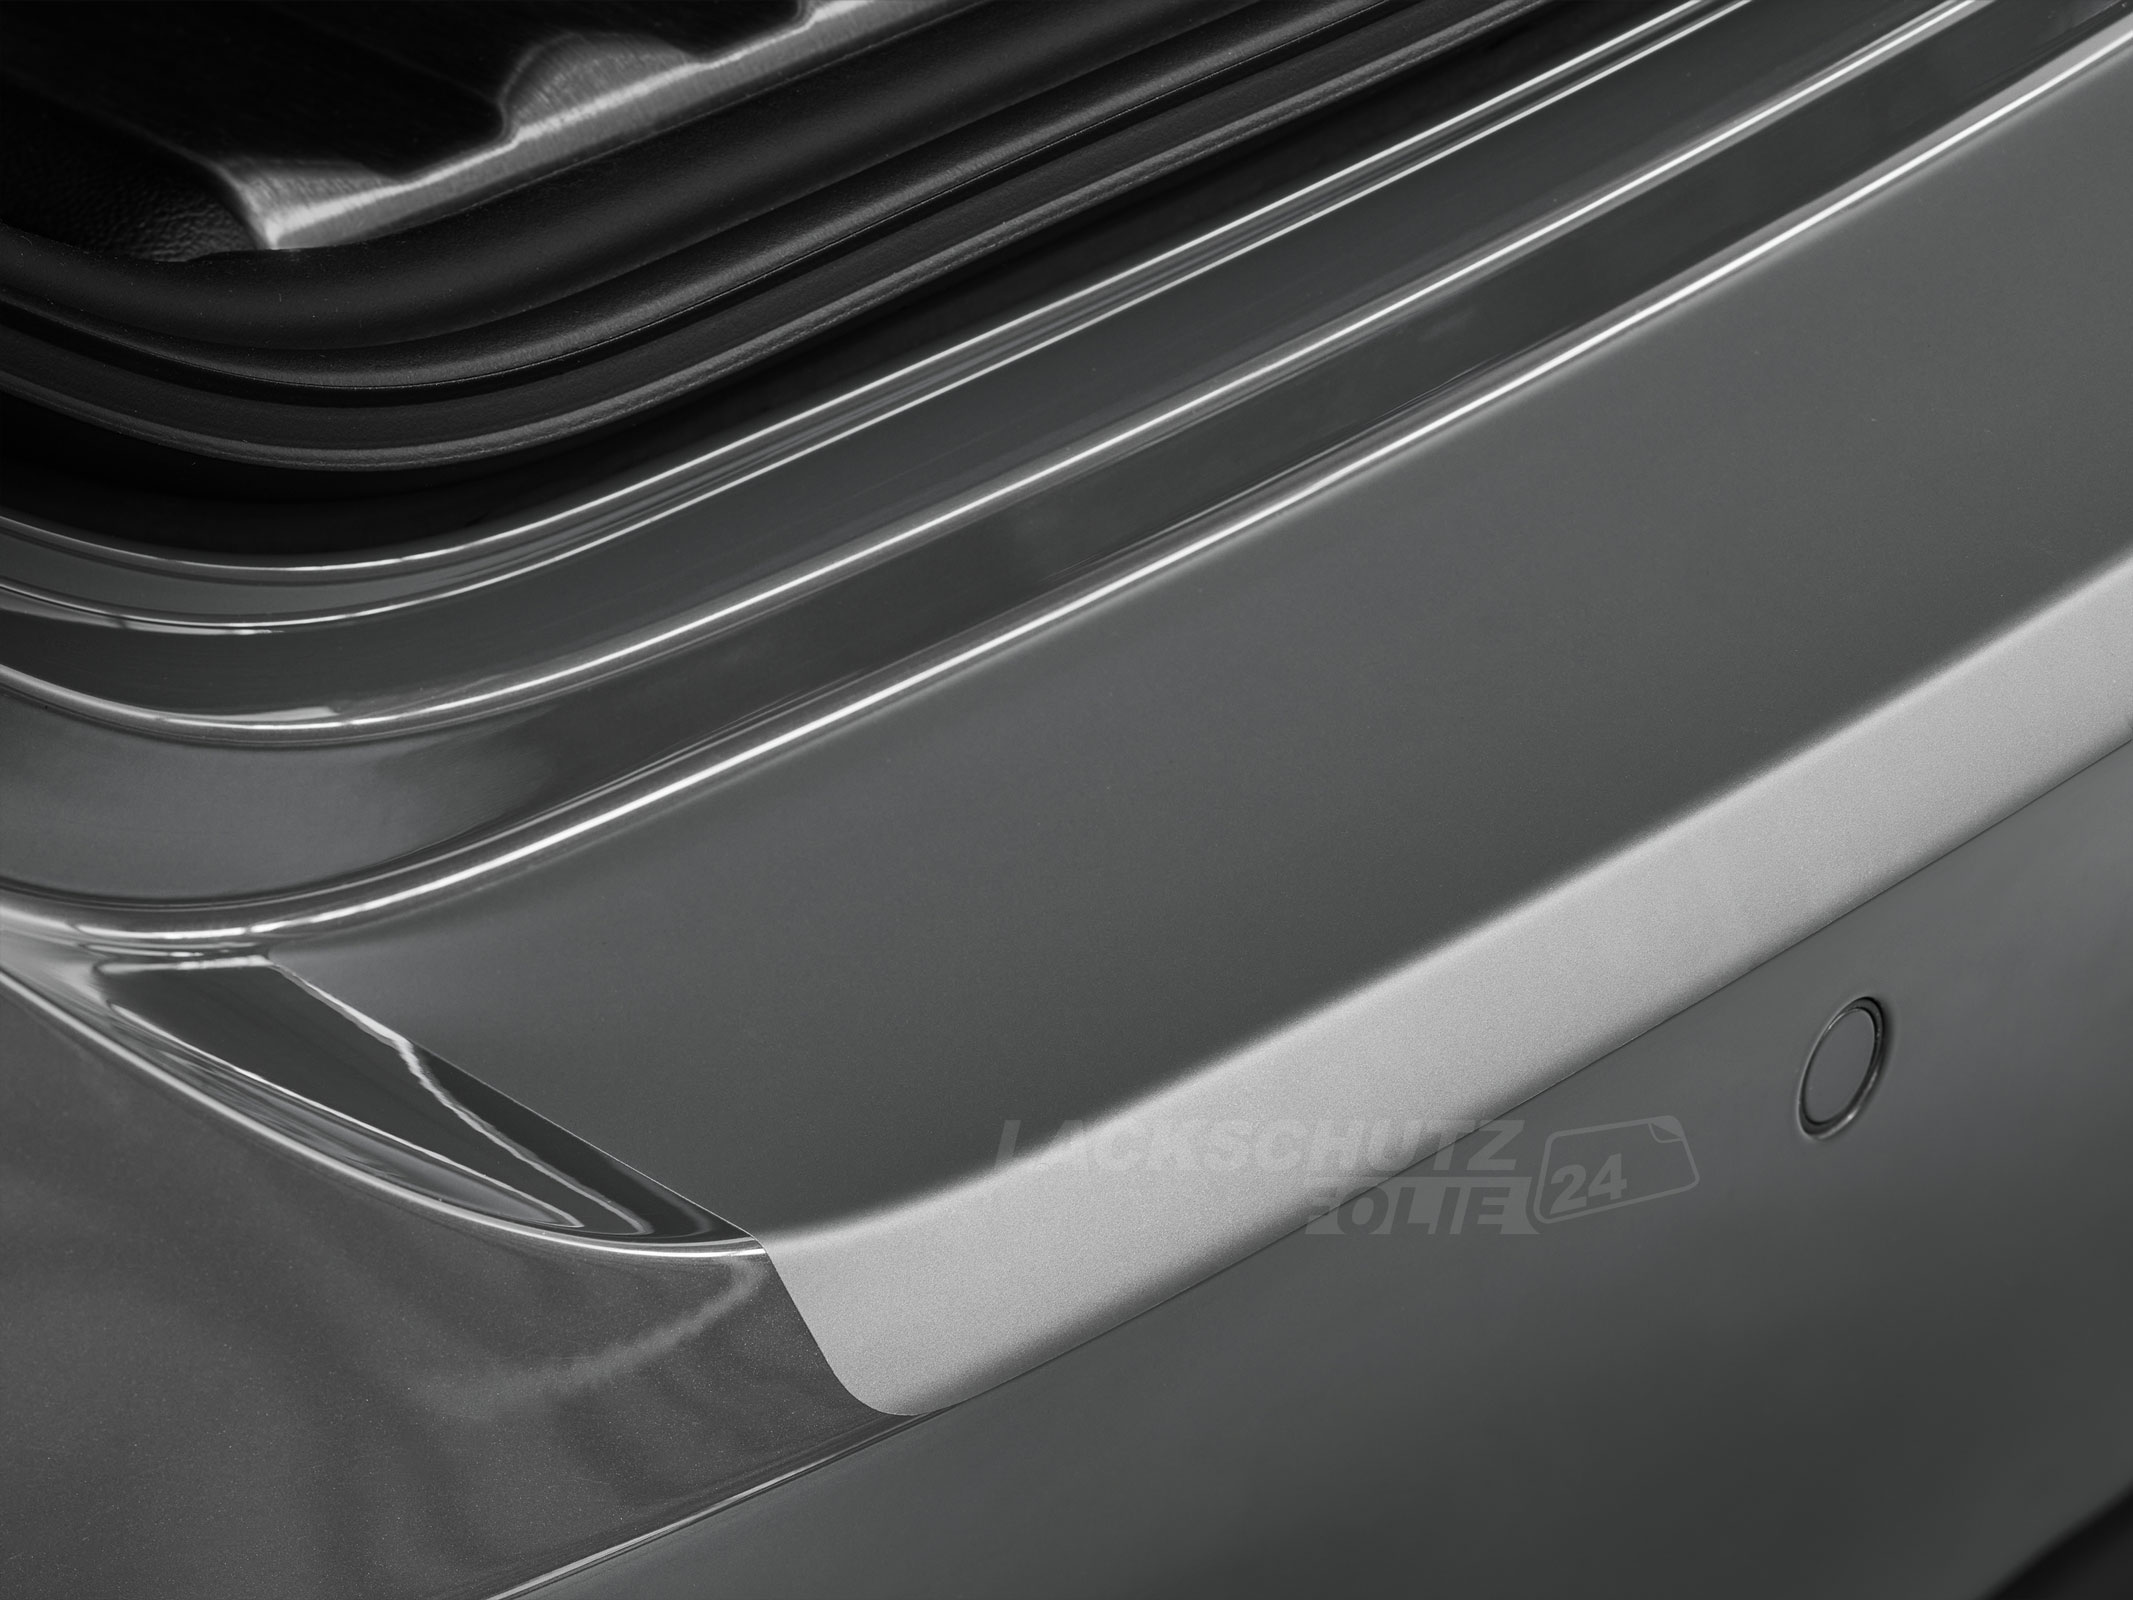 Ladekantenschutzfolie - Transparent Glatt MATT 110 µm stark  für Alfa Romeo Giulietta ab BJ 2010